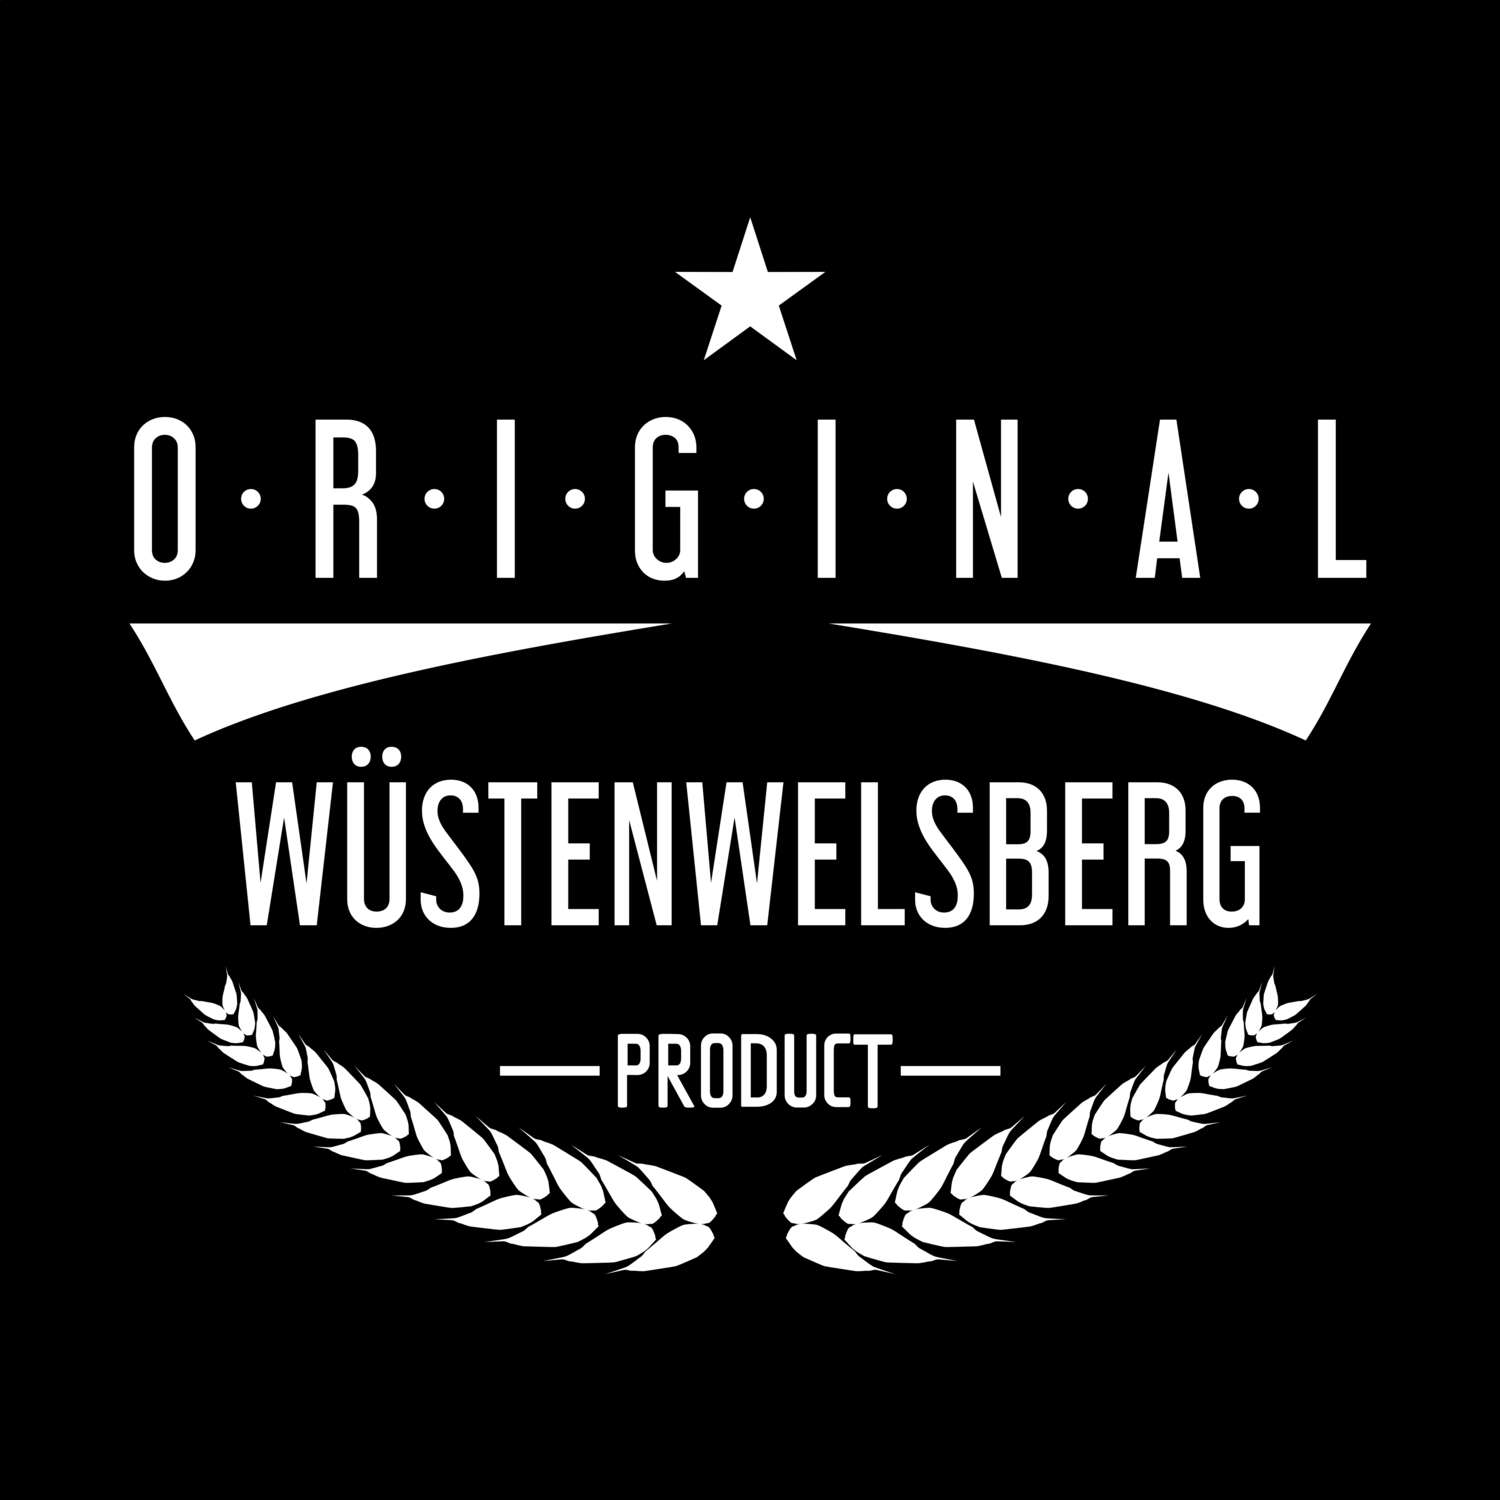 Wüstenwelsberg T-Shirt »Original Product«